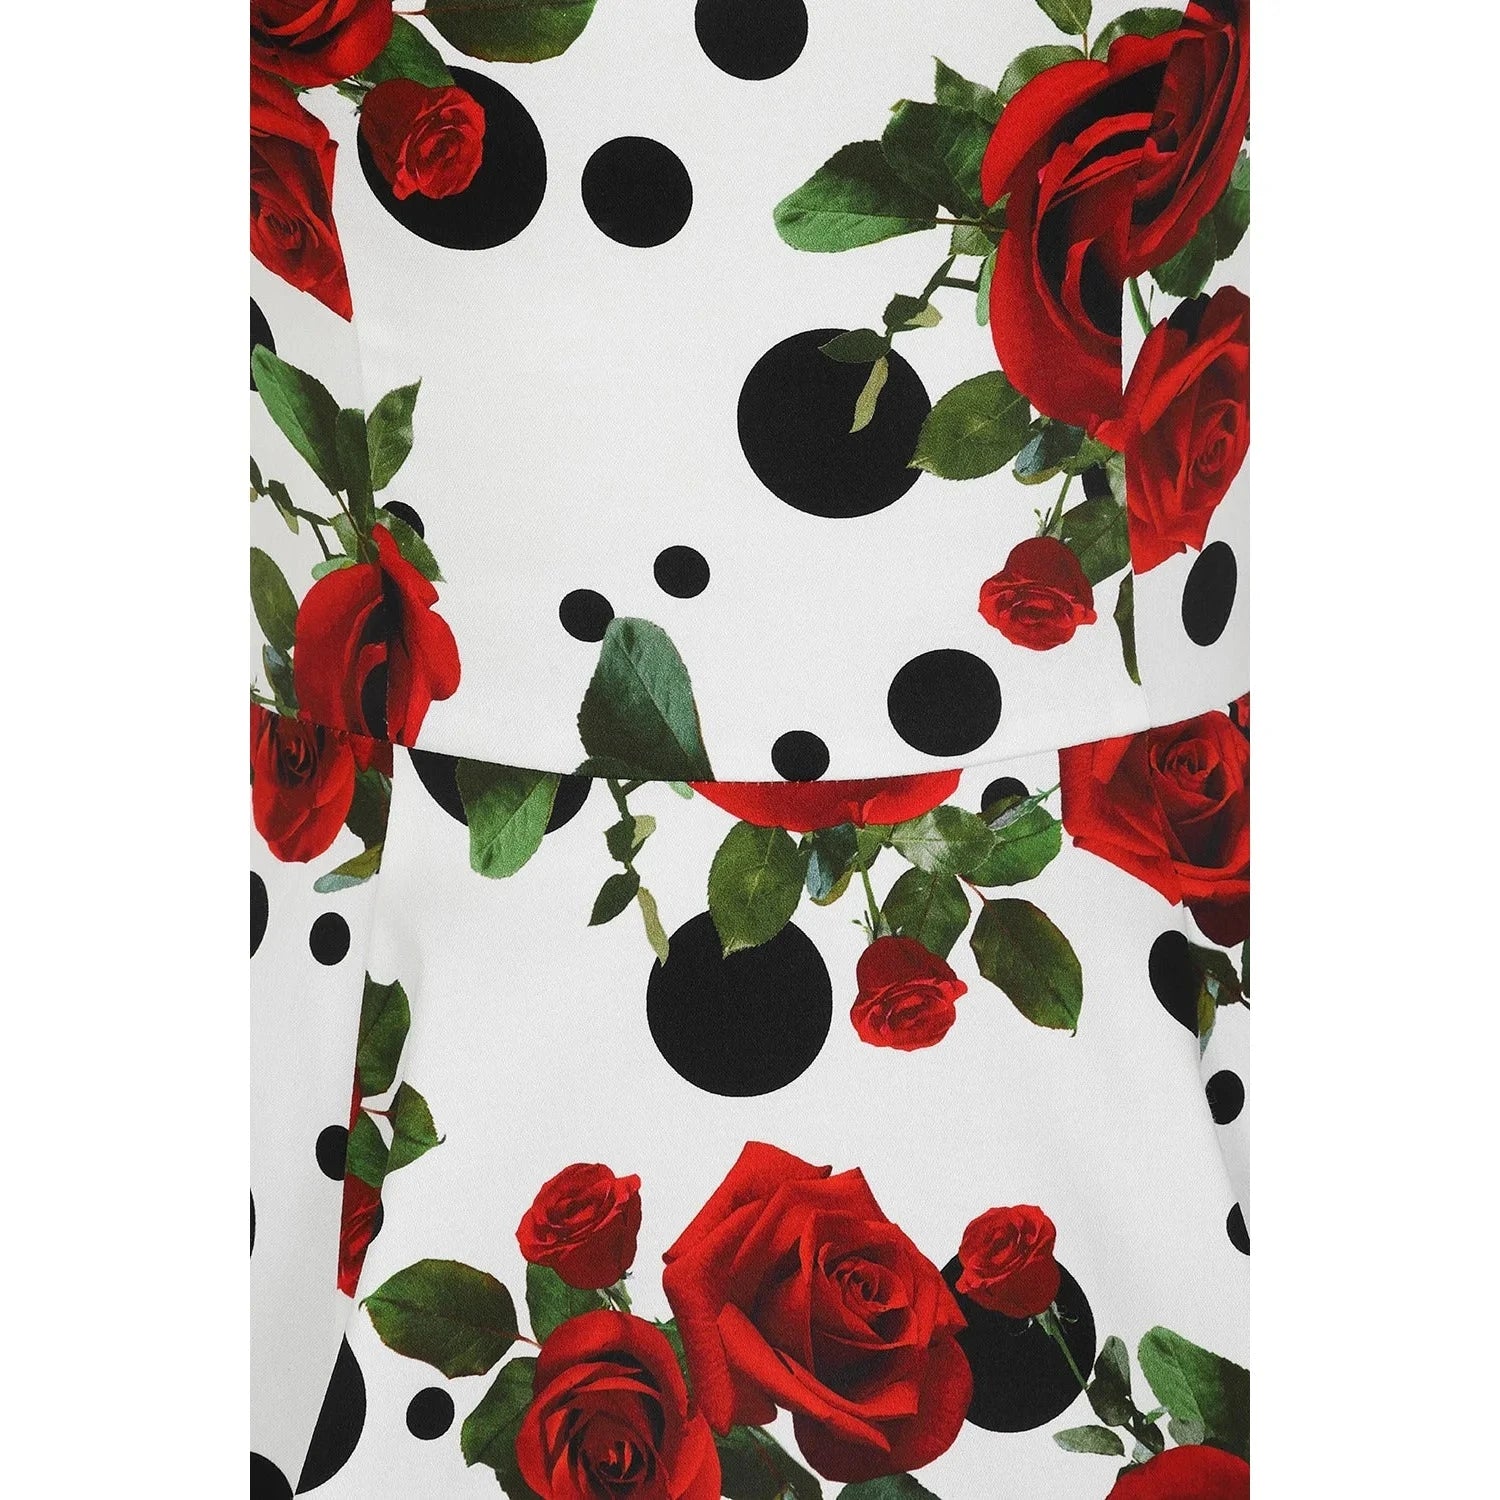 White Polka Dot & Red Rose Print Rockabilly 50s Swing Dress w